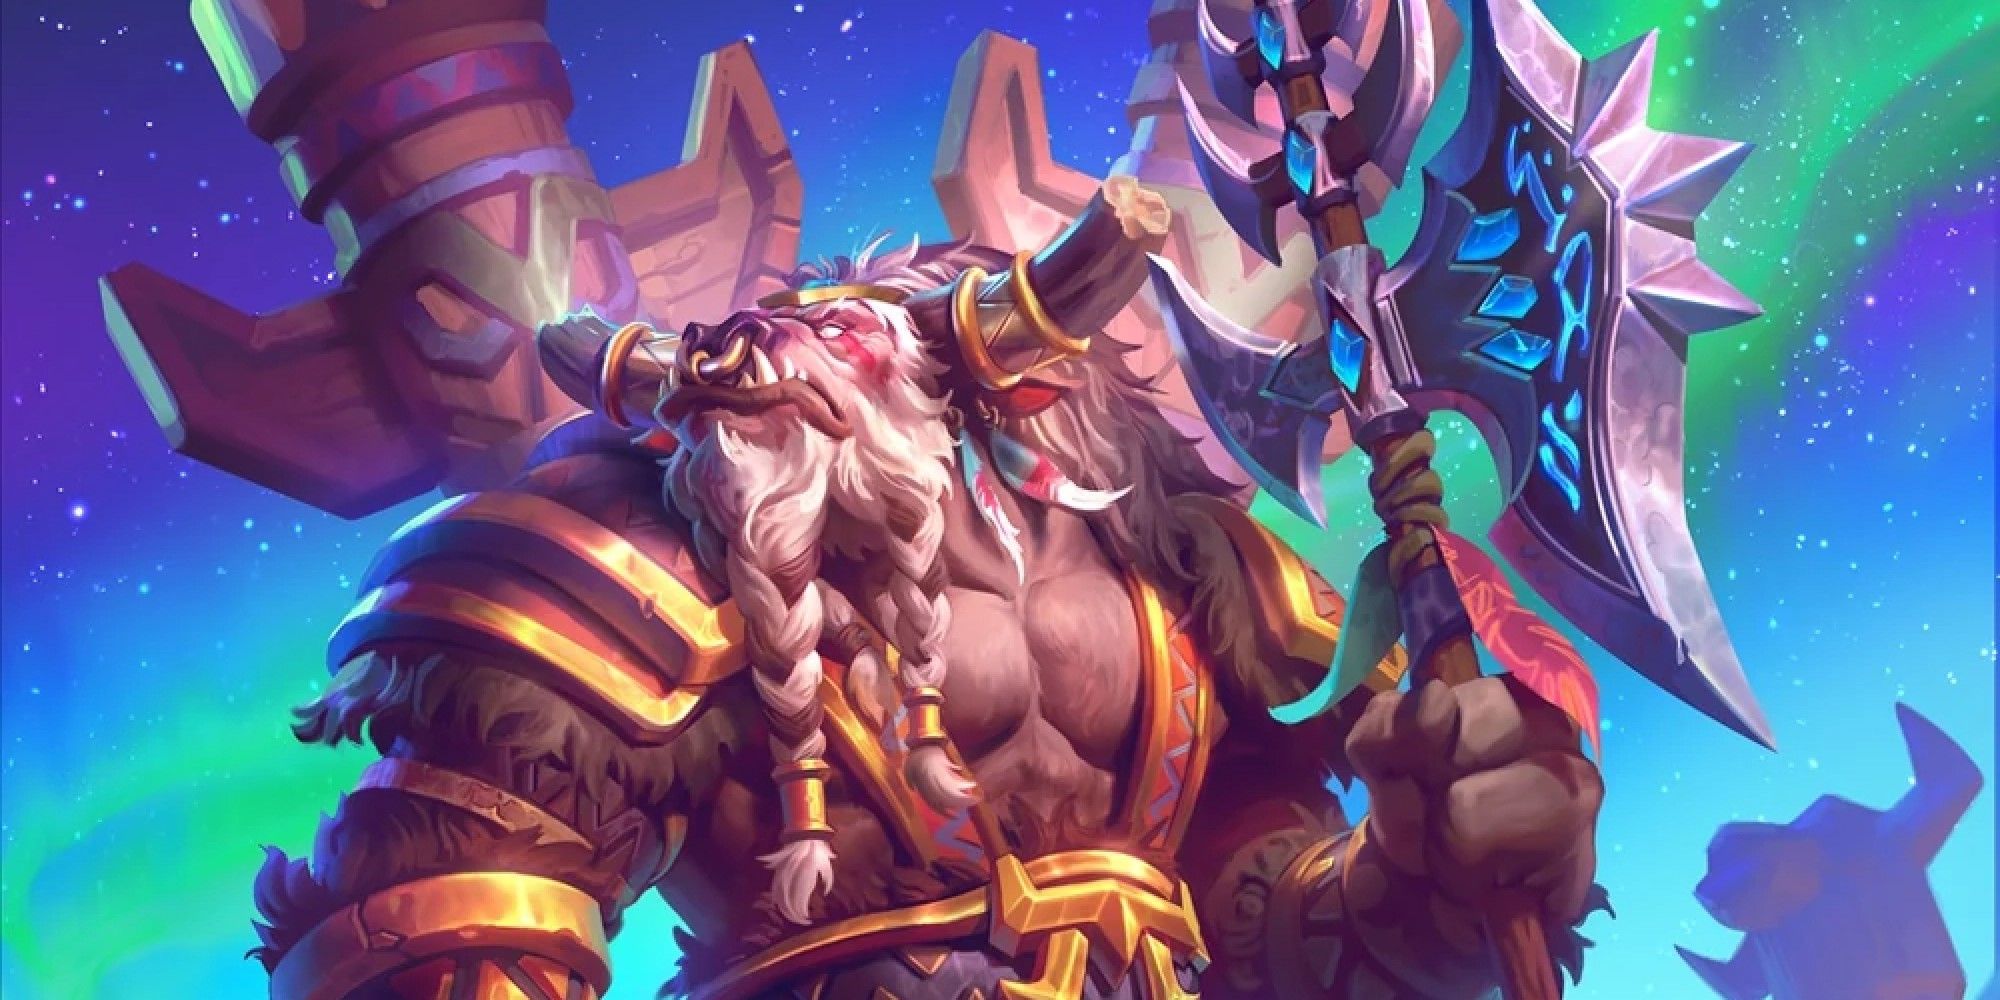 World of Warcraft image showing a Tauren holding an axe